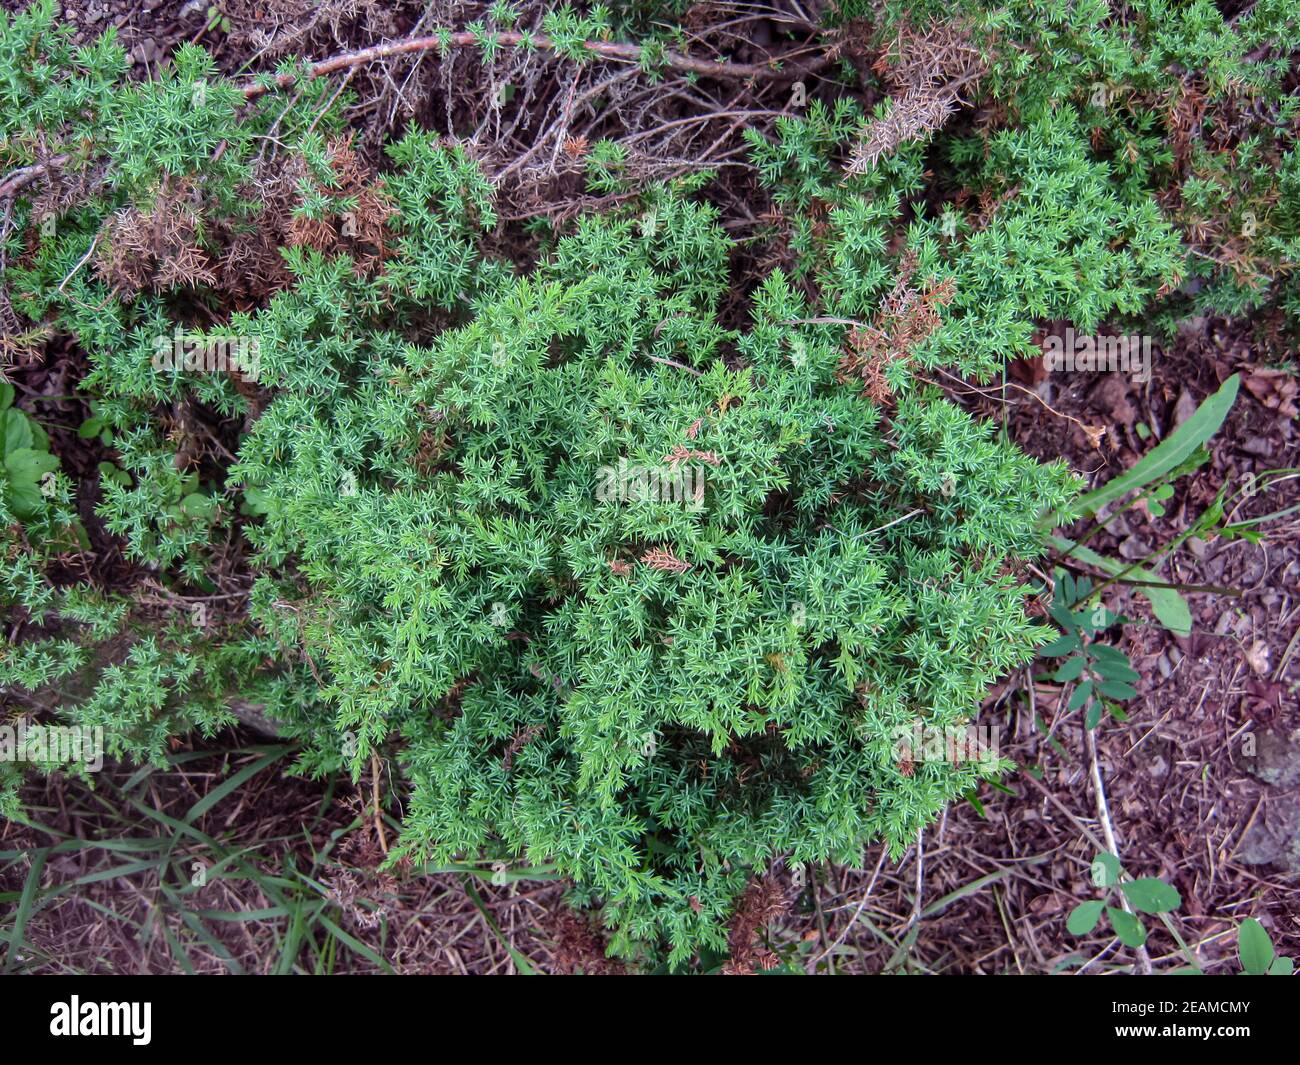 Closeup green thorny bush, plant with thorns Stock Photo